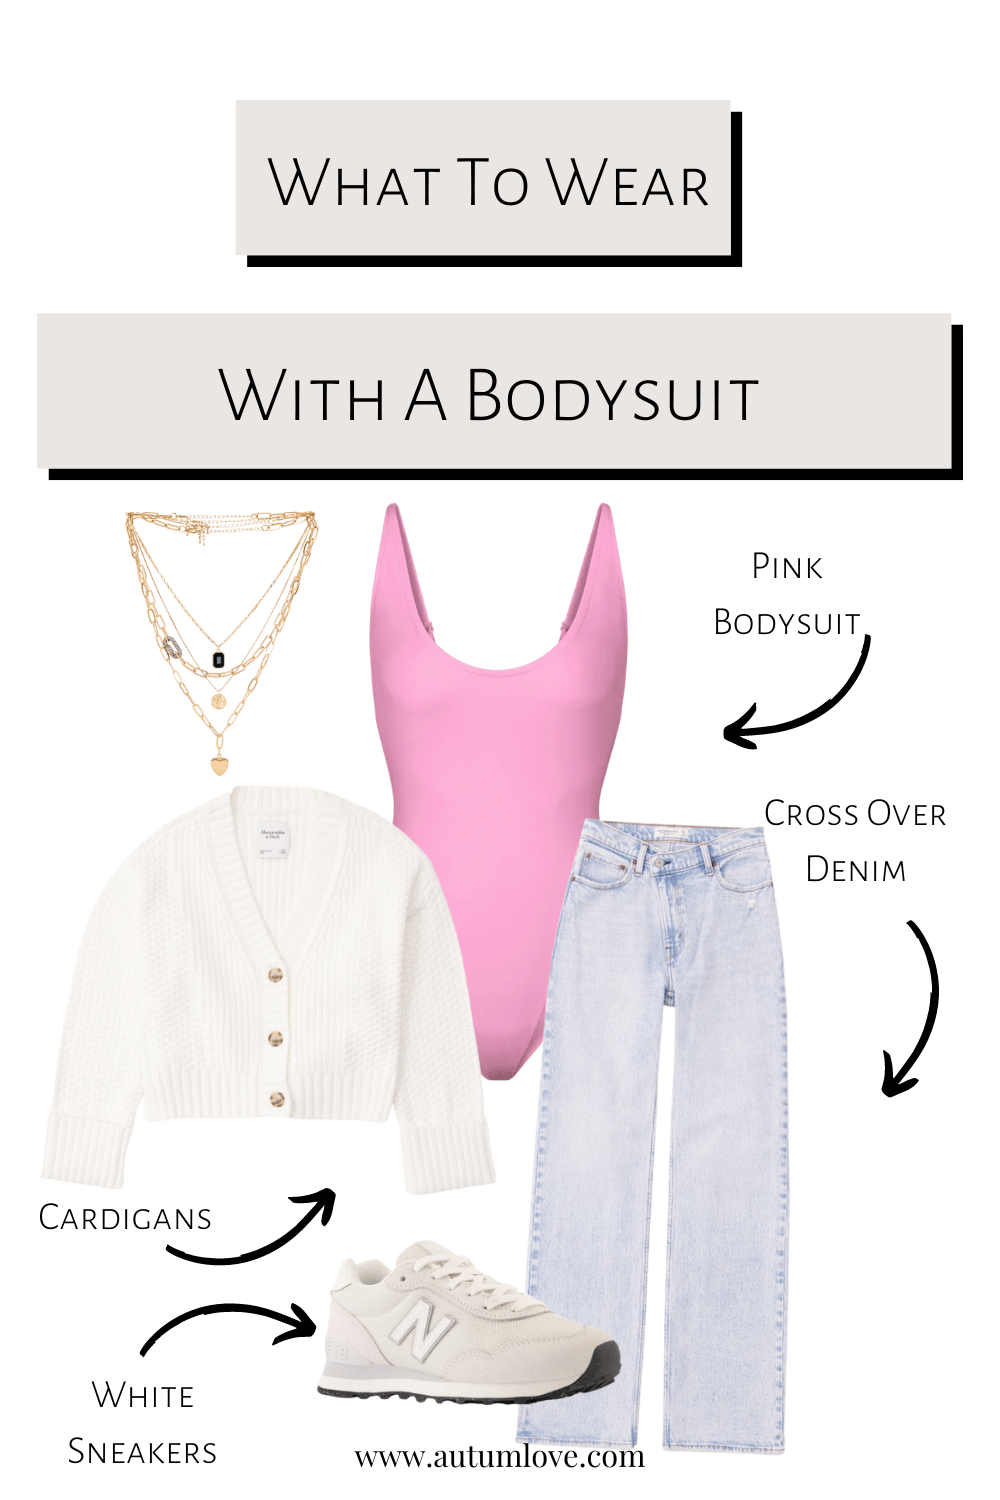 4 Ways To Style a Bodysuit